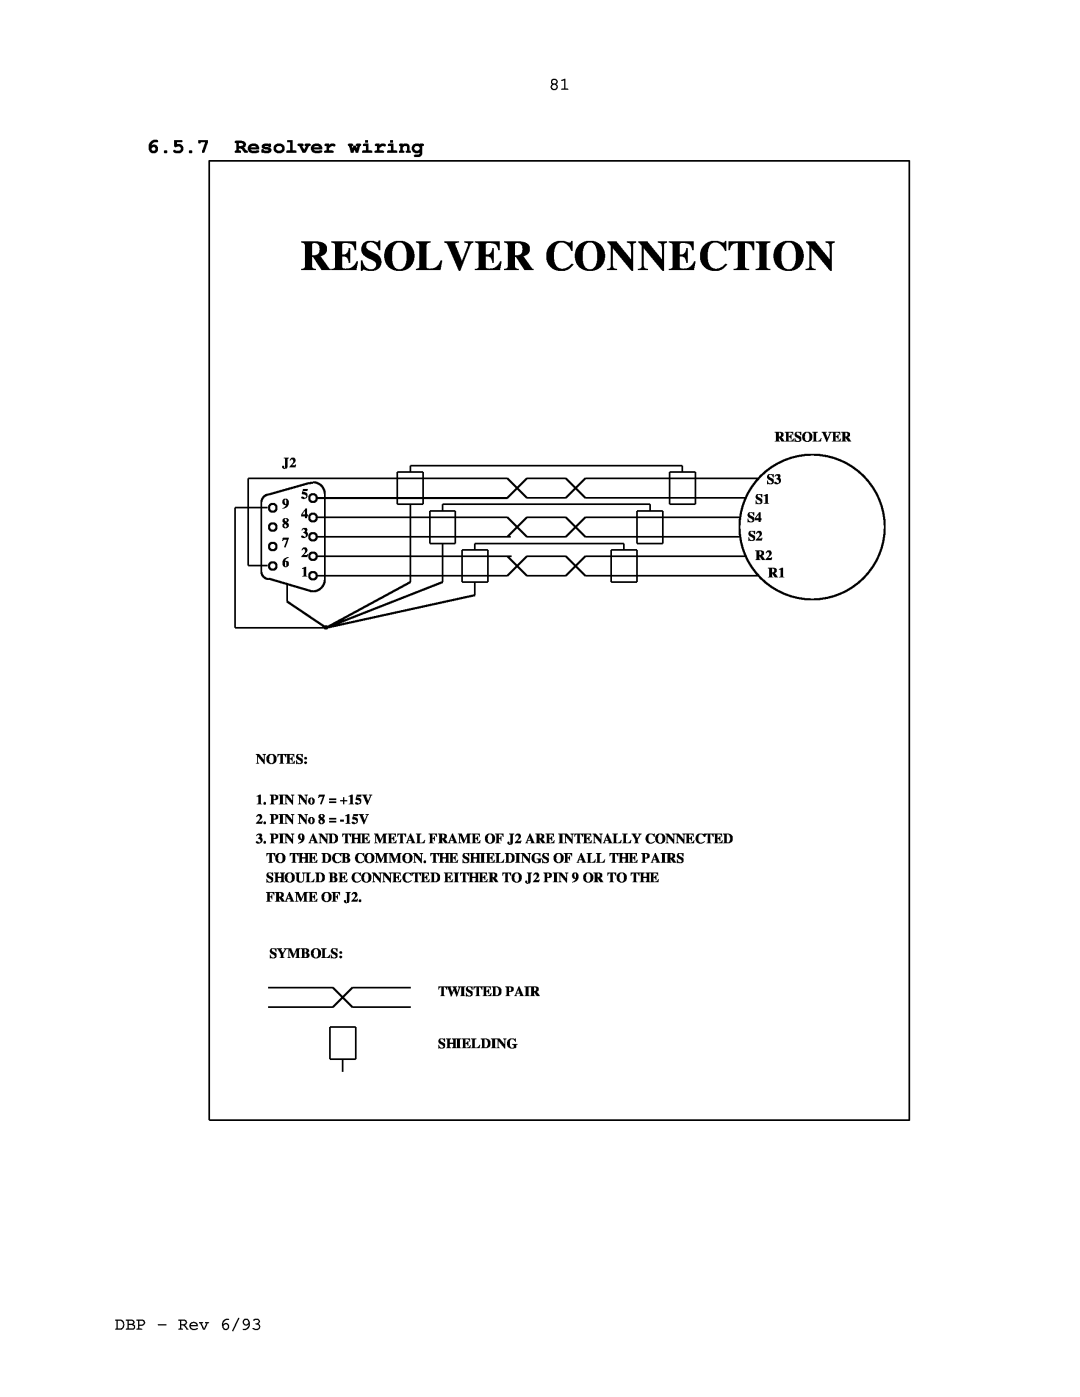 Elmo DBP SERIES manual Resolver Connection, 6.5.7Resolver wiring 